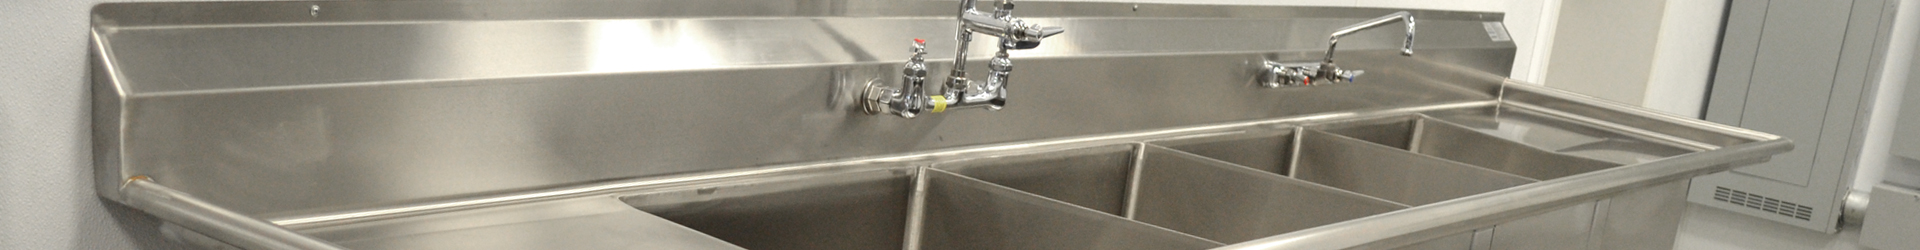 Advance Tabco Fabricated Sinks